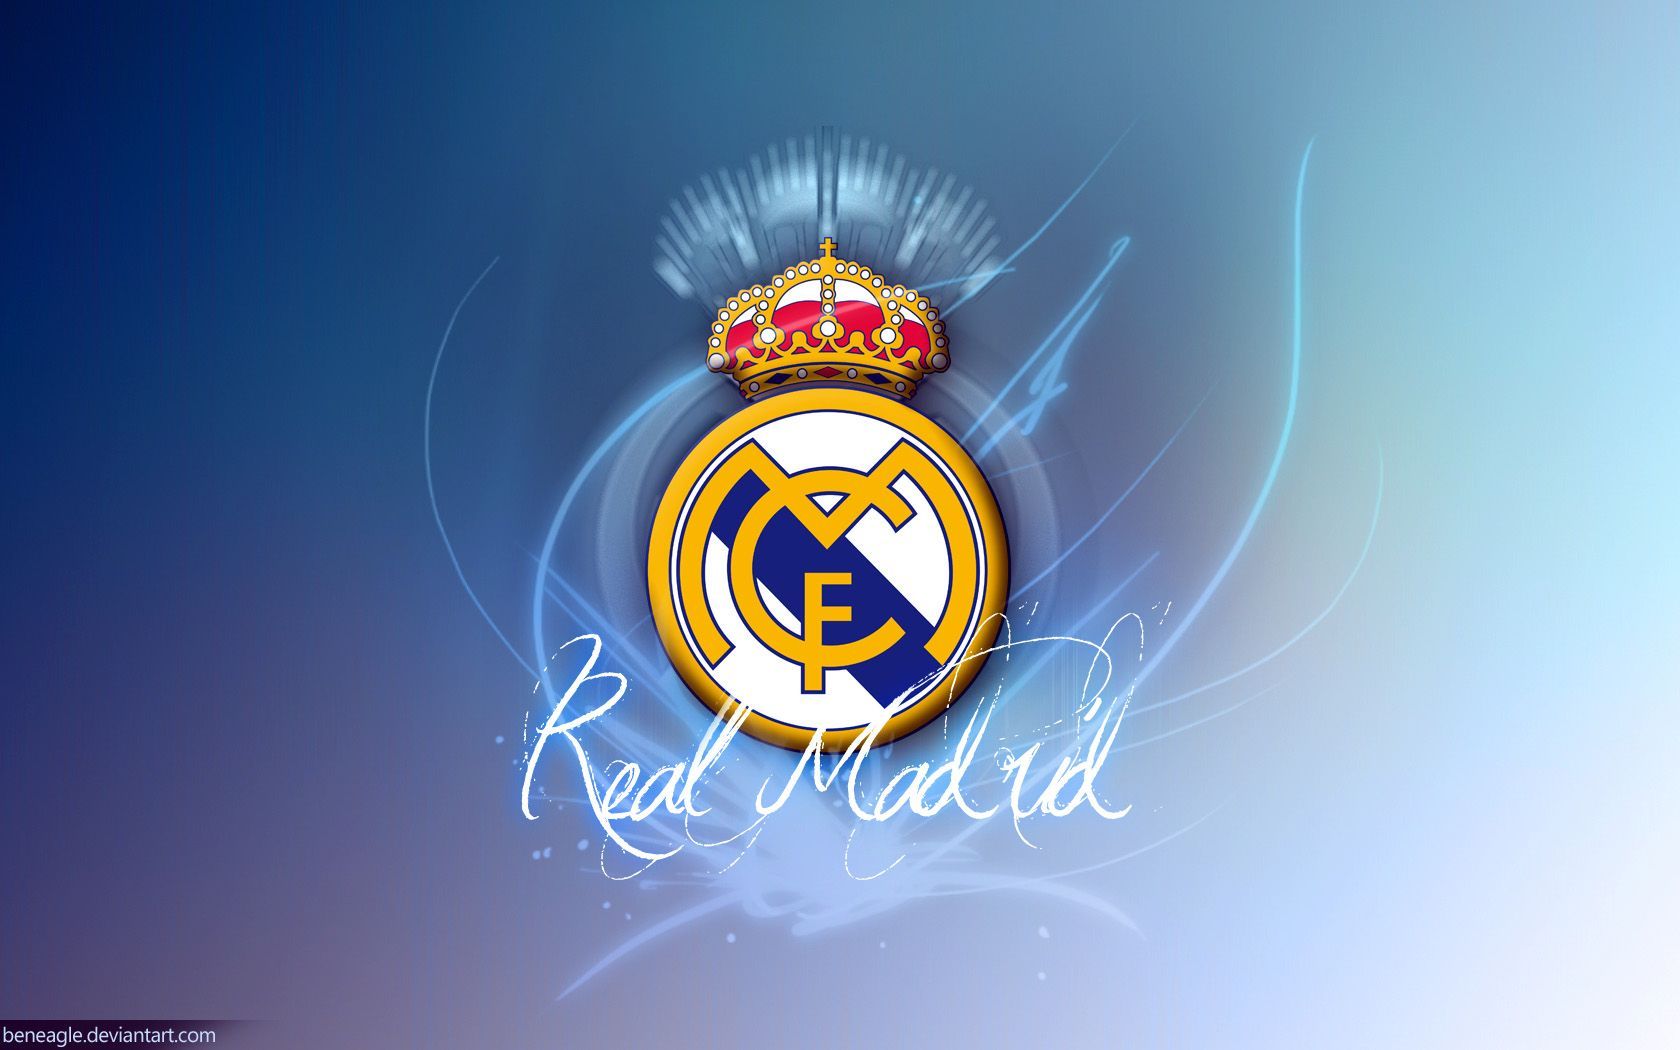 Real_madrid_logo-3.jpg